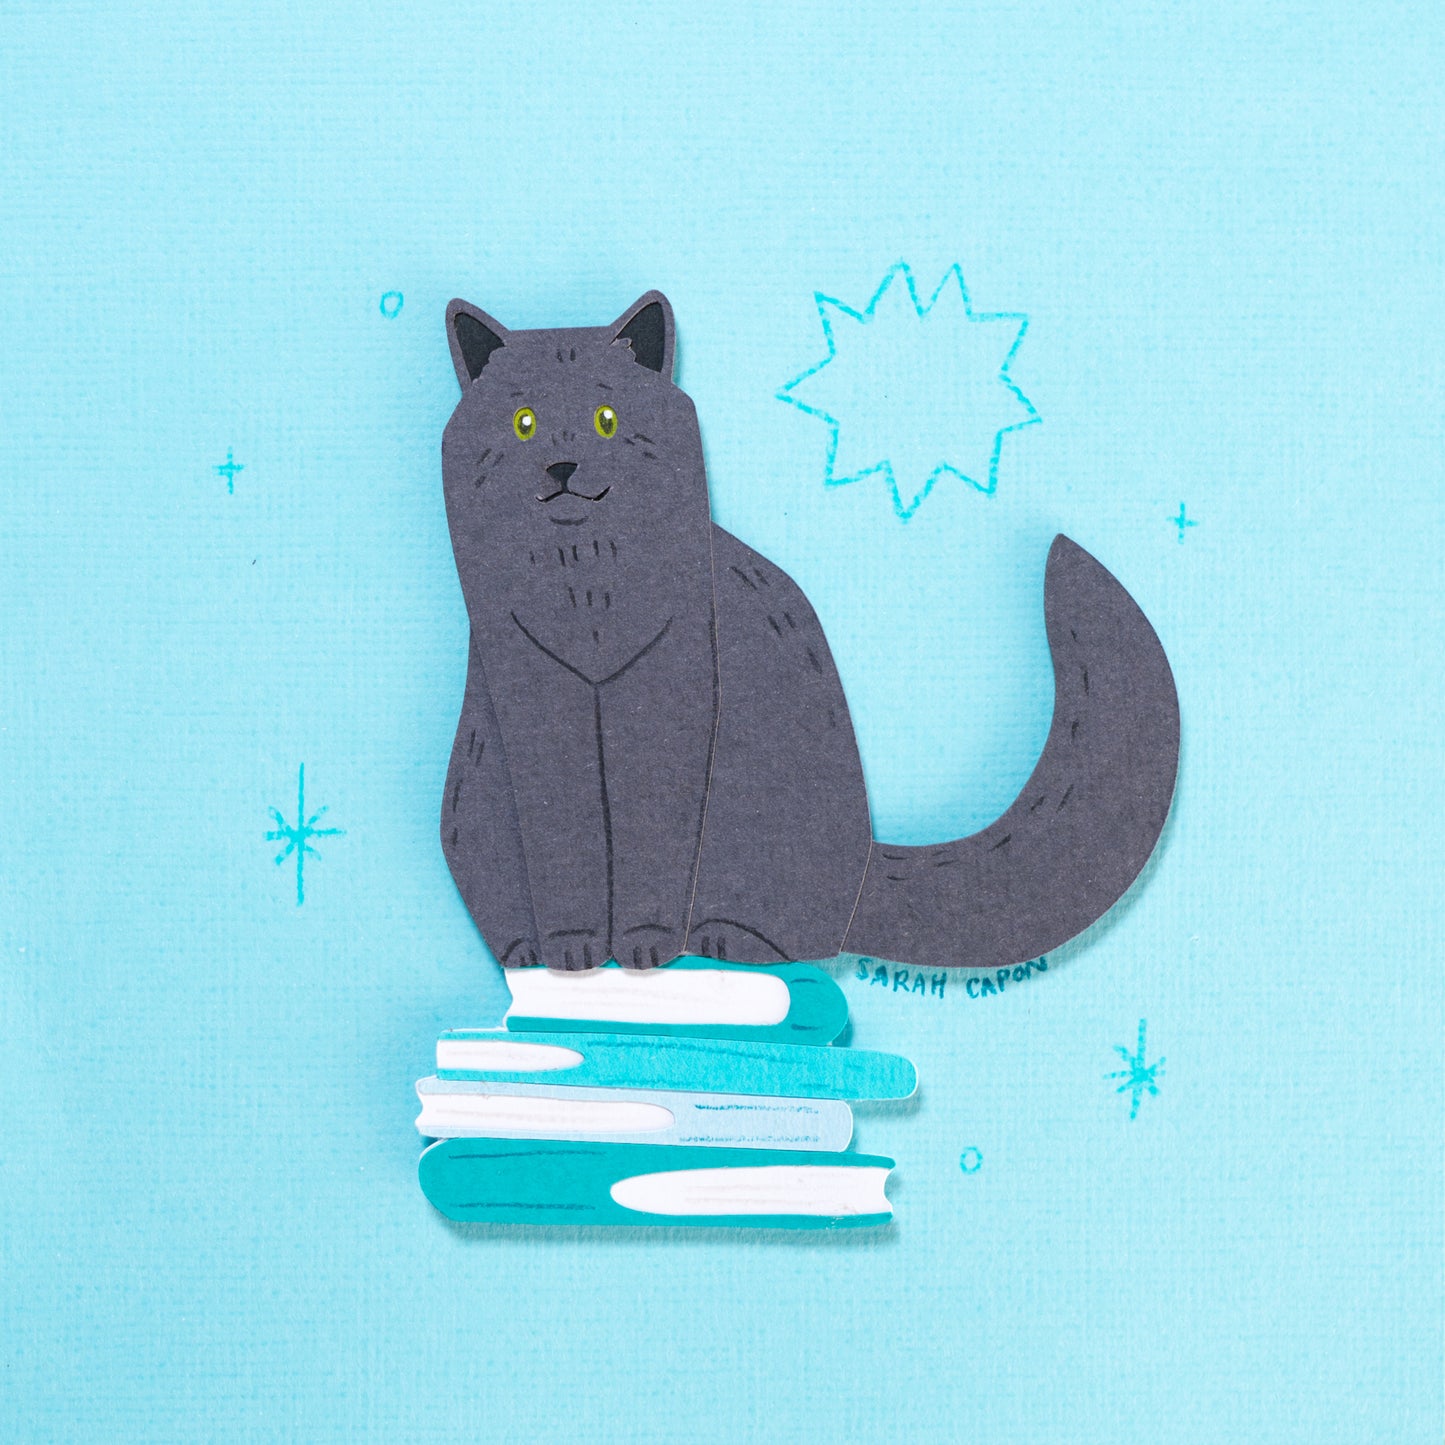 Black Cats on Books